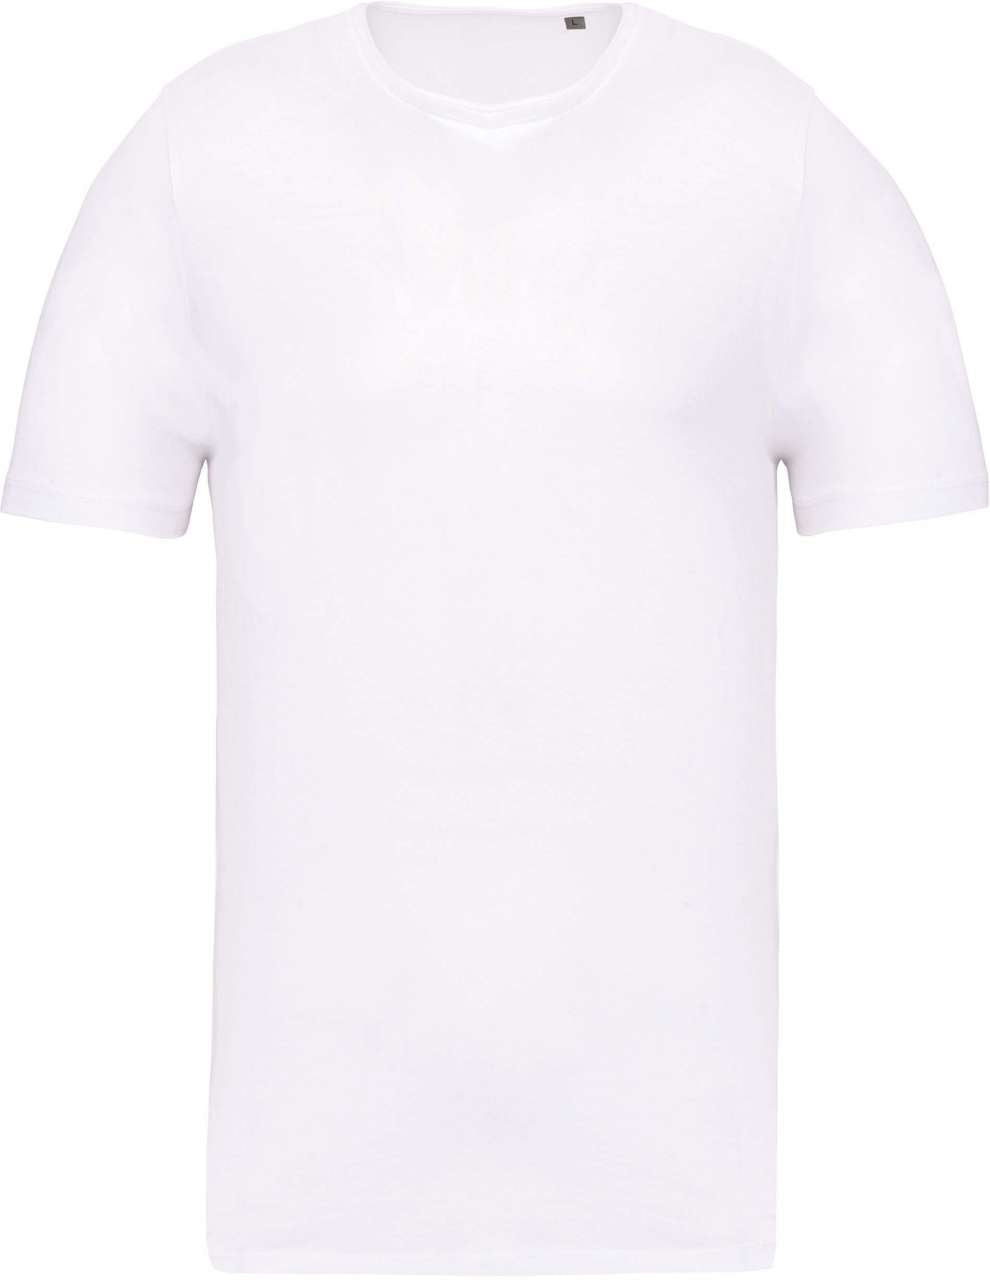 Kariban Herren T-Shirt Rundhals Kurzarm Basic Sport Shirt